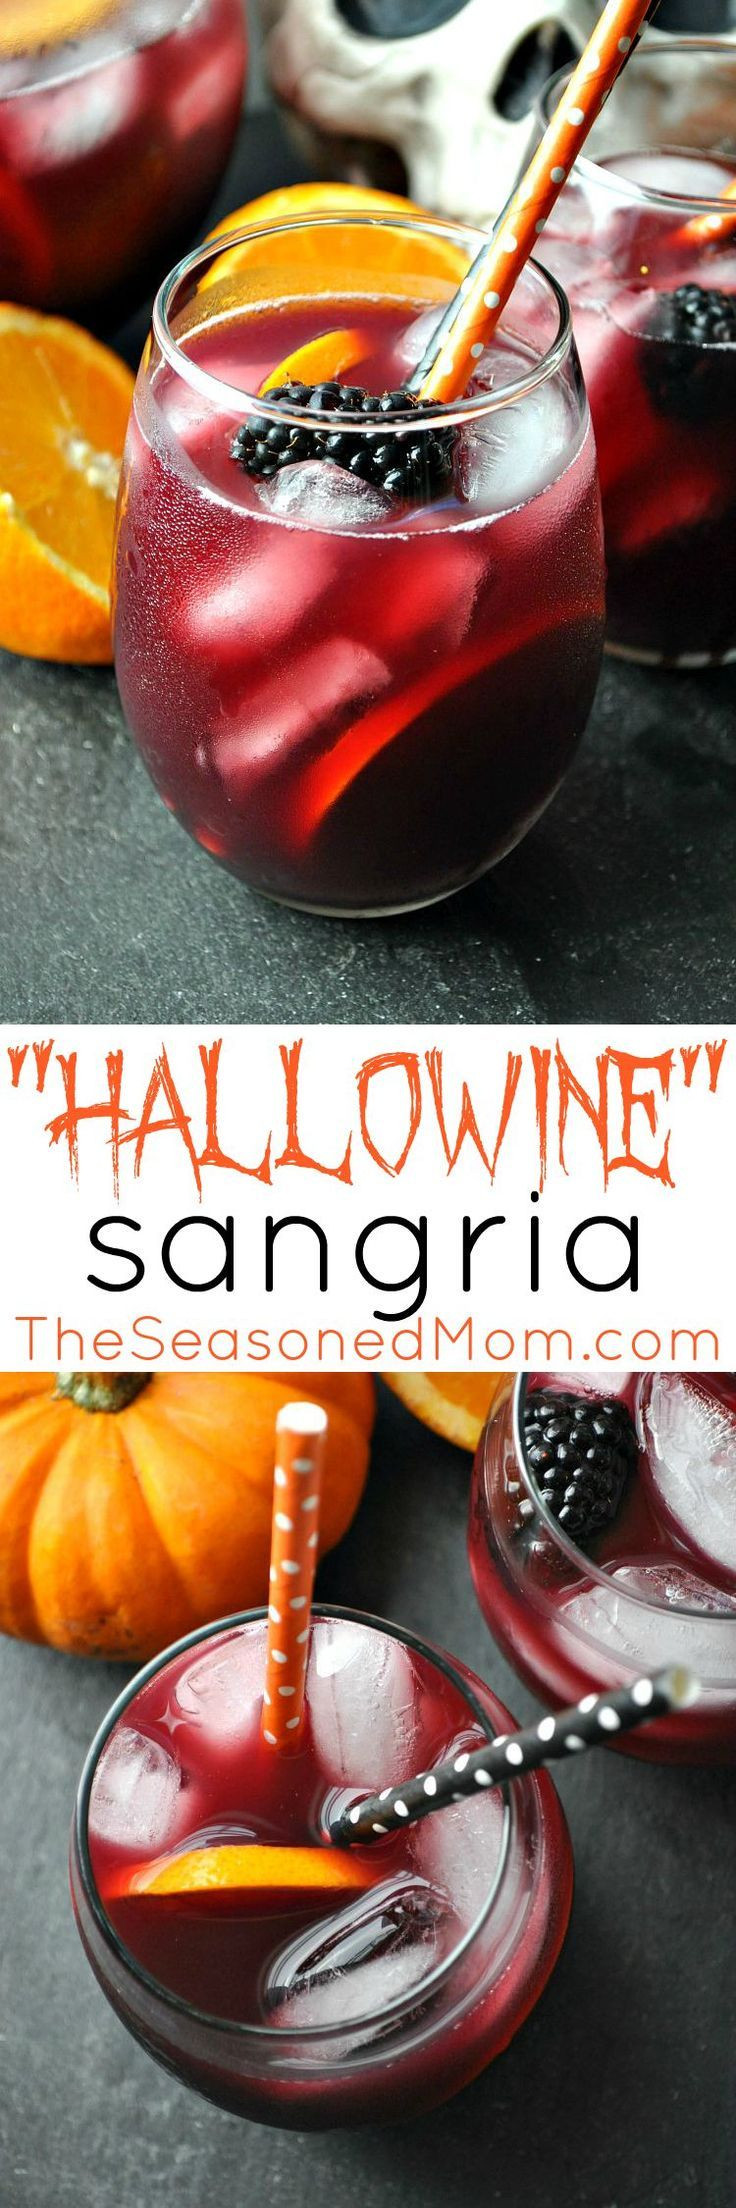 Adult Halloween Drinks
 Hallowine Sangria Recipe Drinks